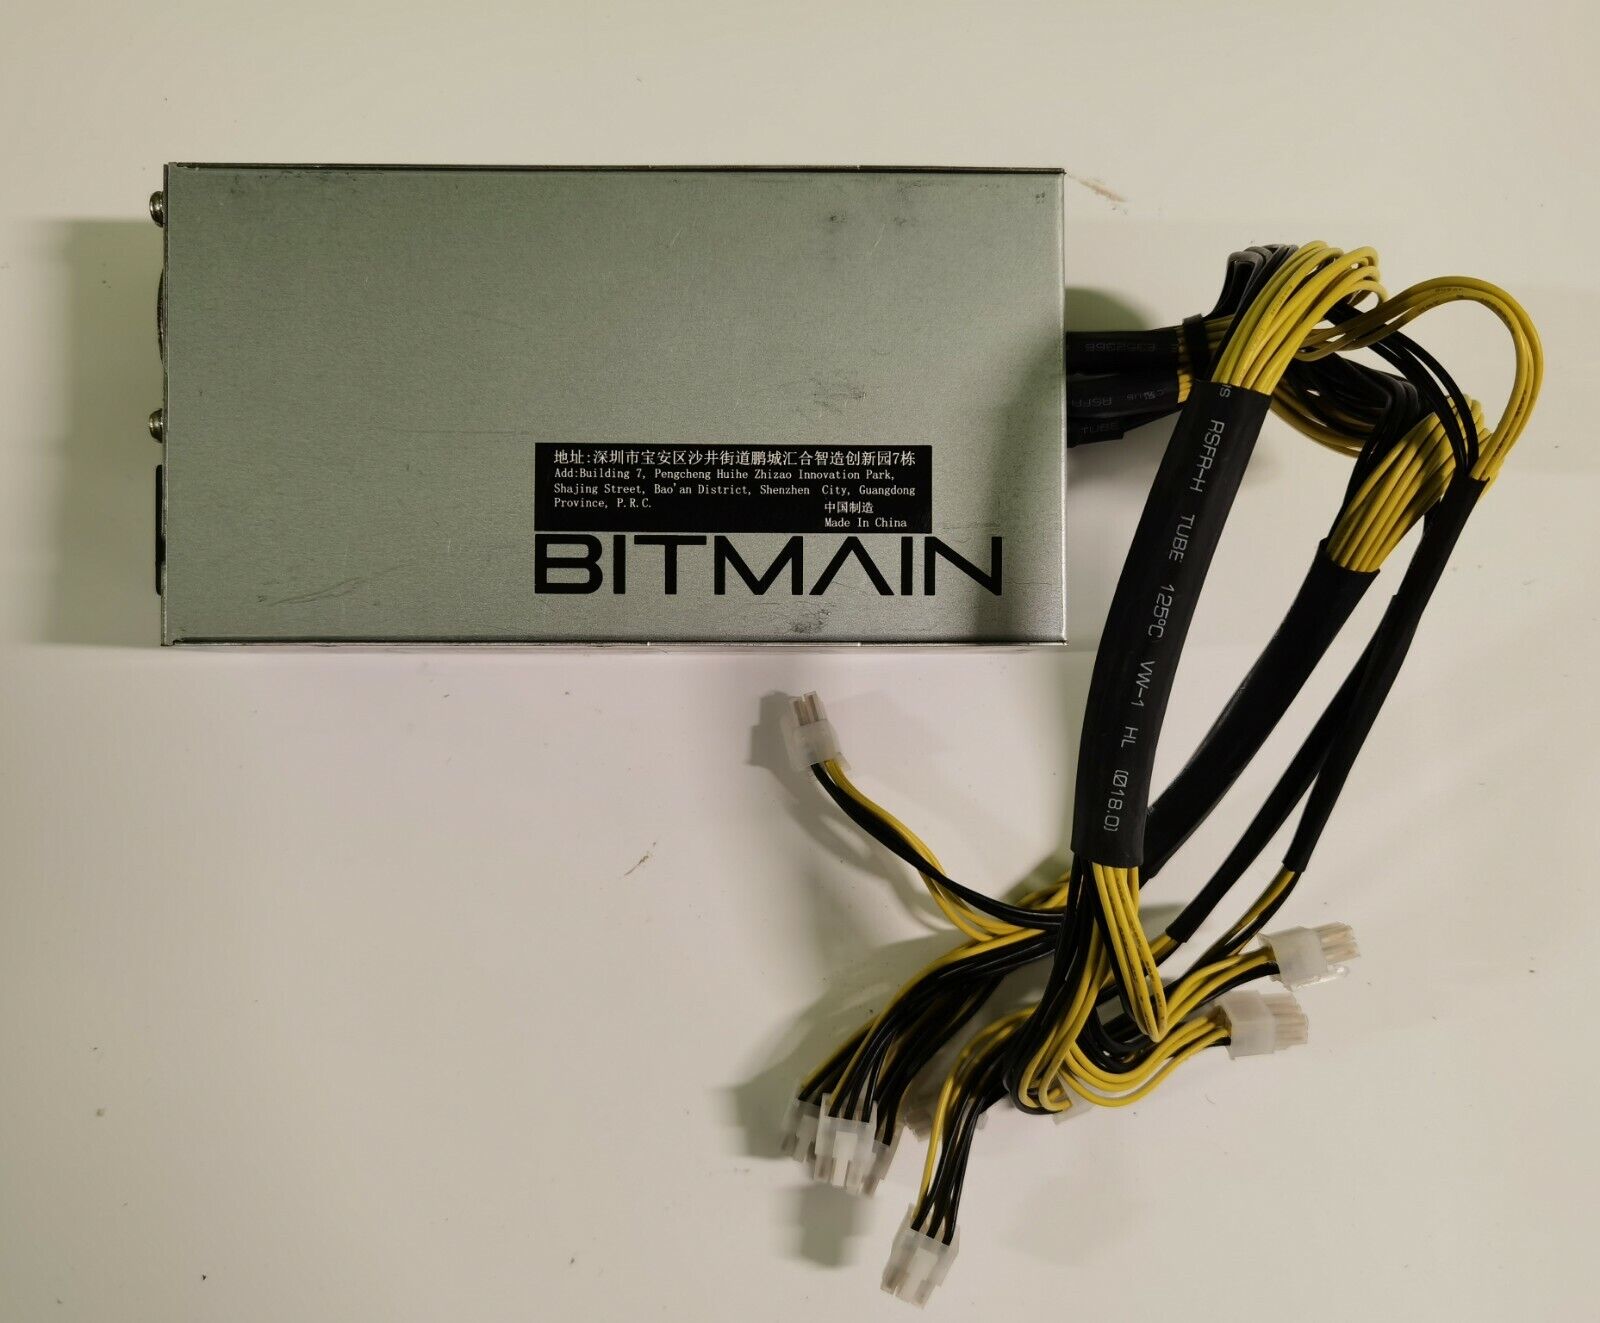 BITMAIN APW7 PSU 1800w for one Antminer. Works great